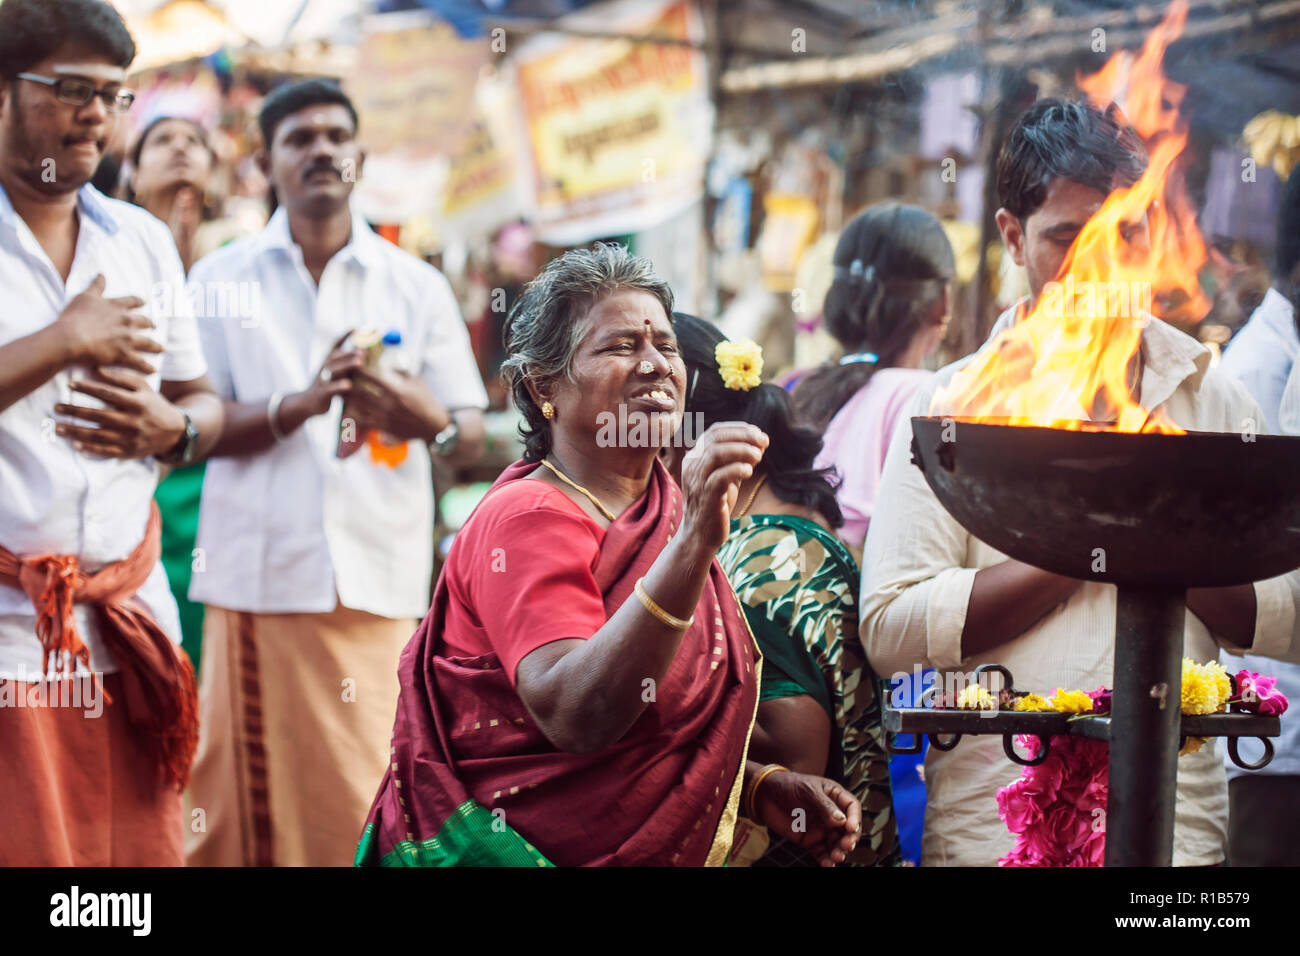 Tiruvannamalai in Tamil Nadu, India, January 31, 2018: People praying in front of the Tiruvannamalai temple Stock Photo